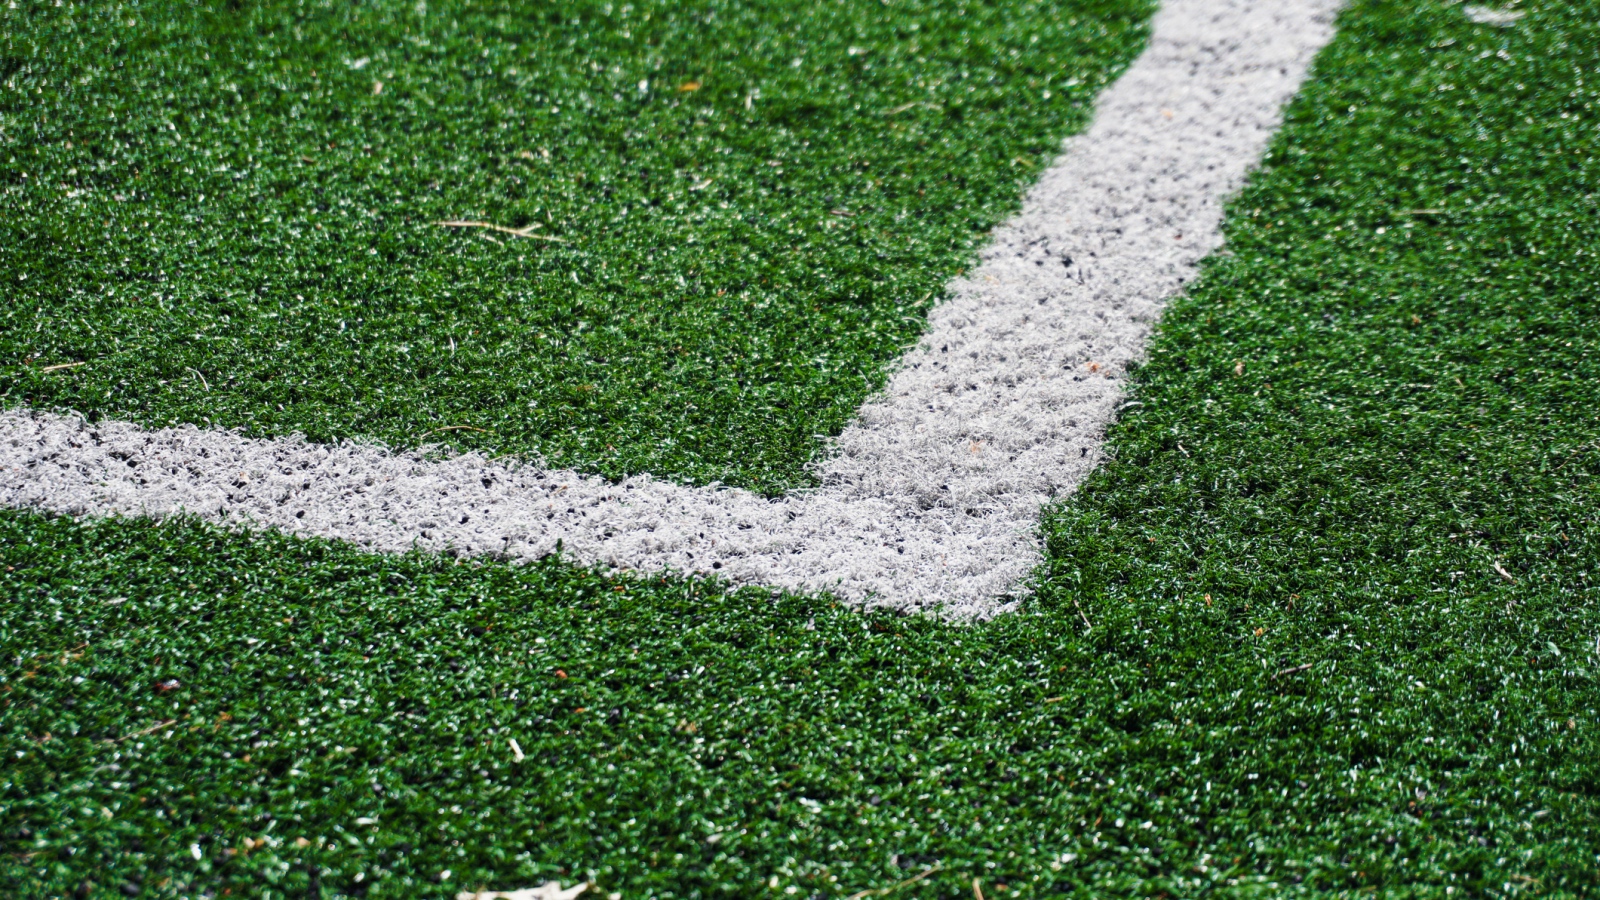 artificial turf on NFL field